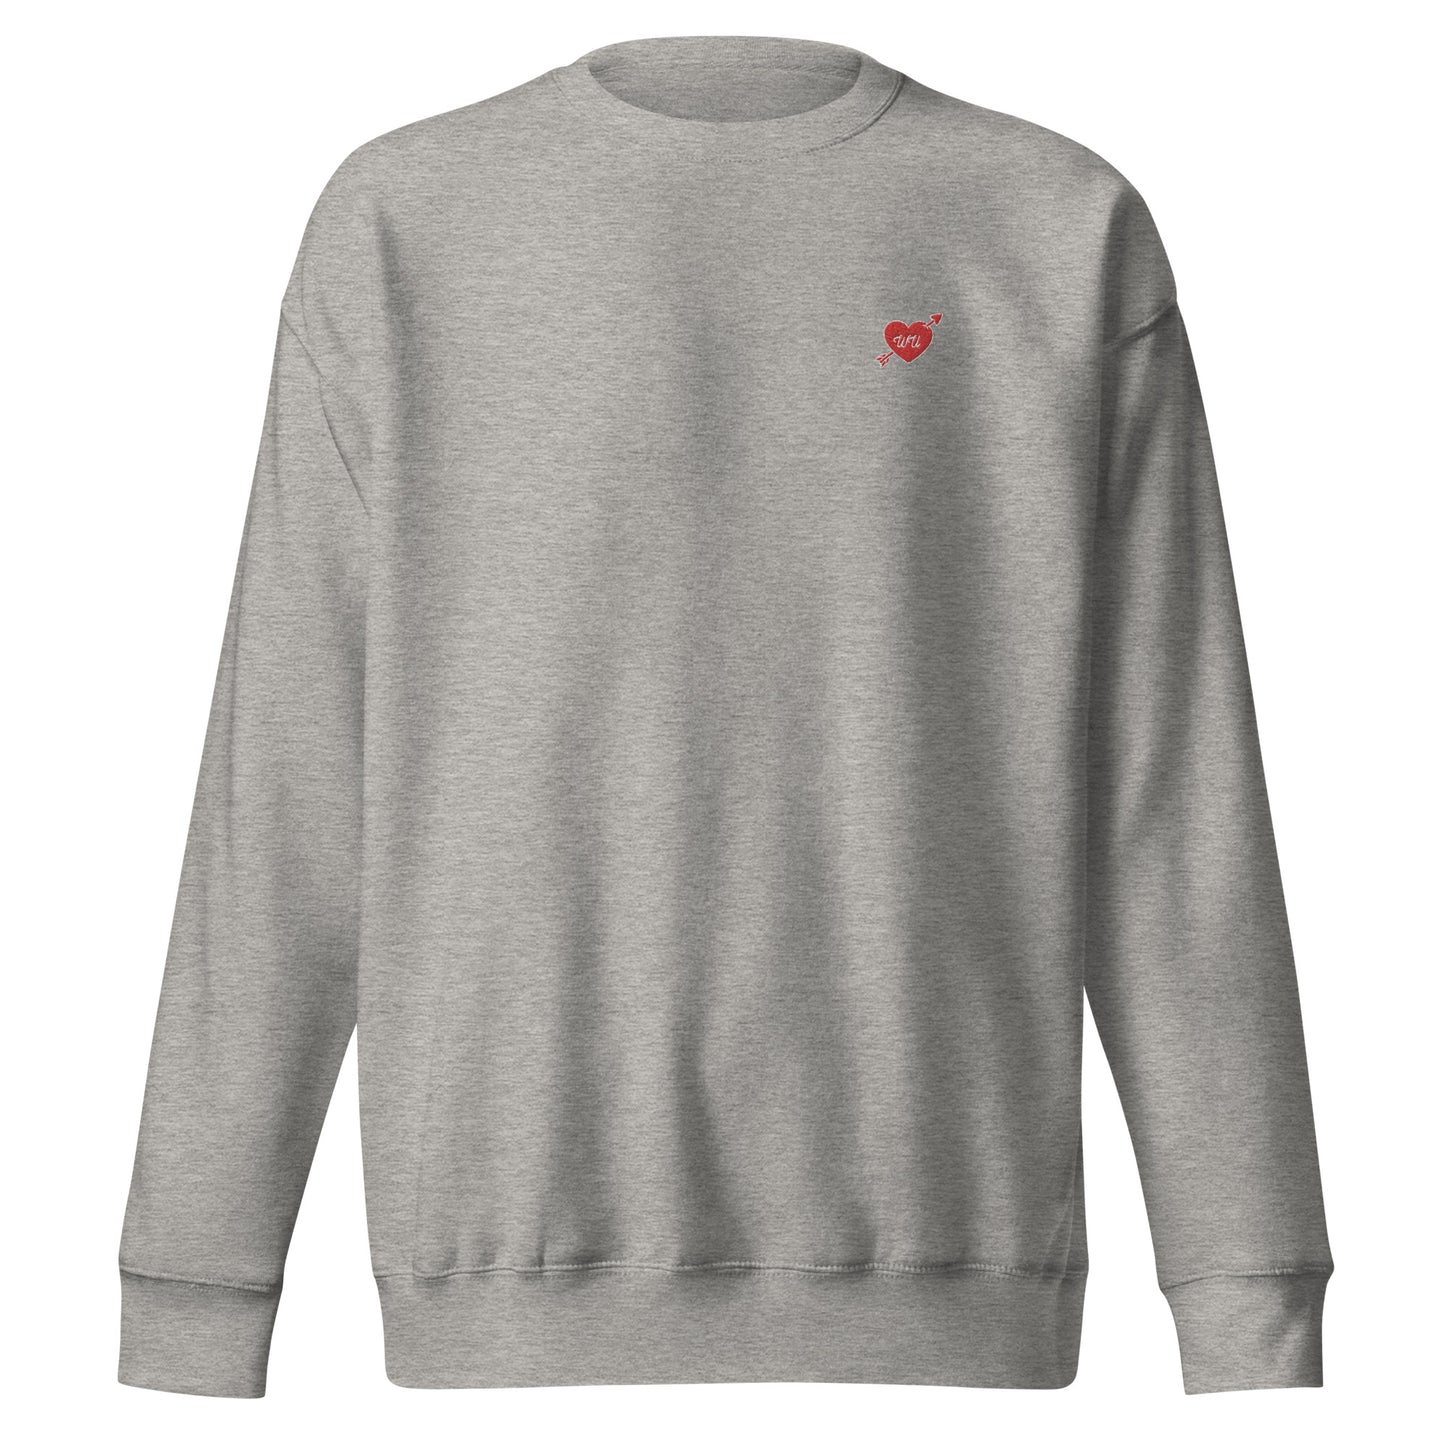 WAKE UP Valentine's Day Crewneck Sweatshirt (Logo)